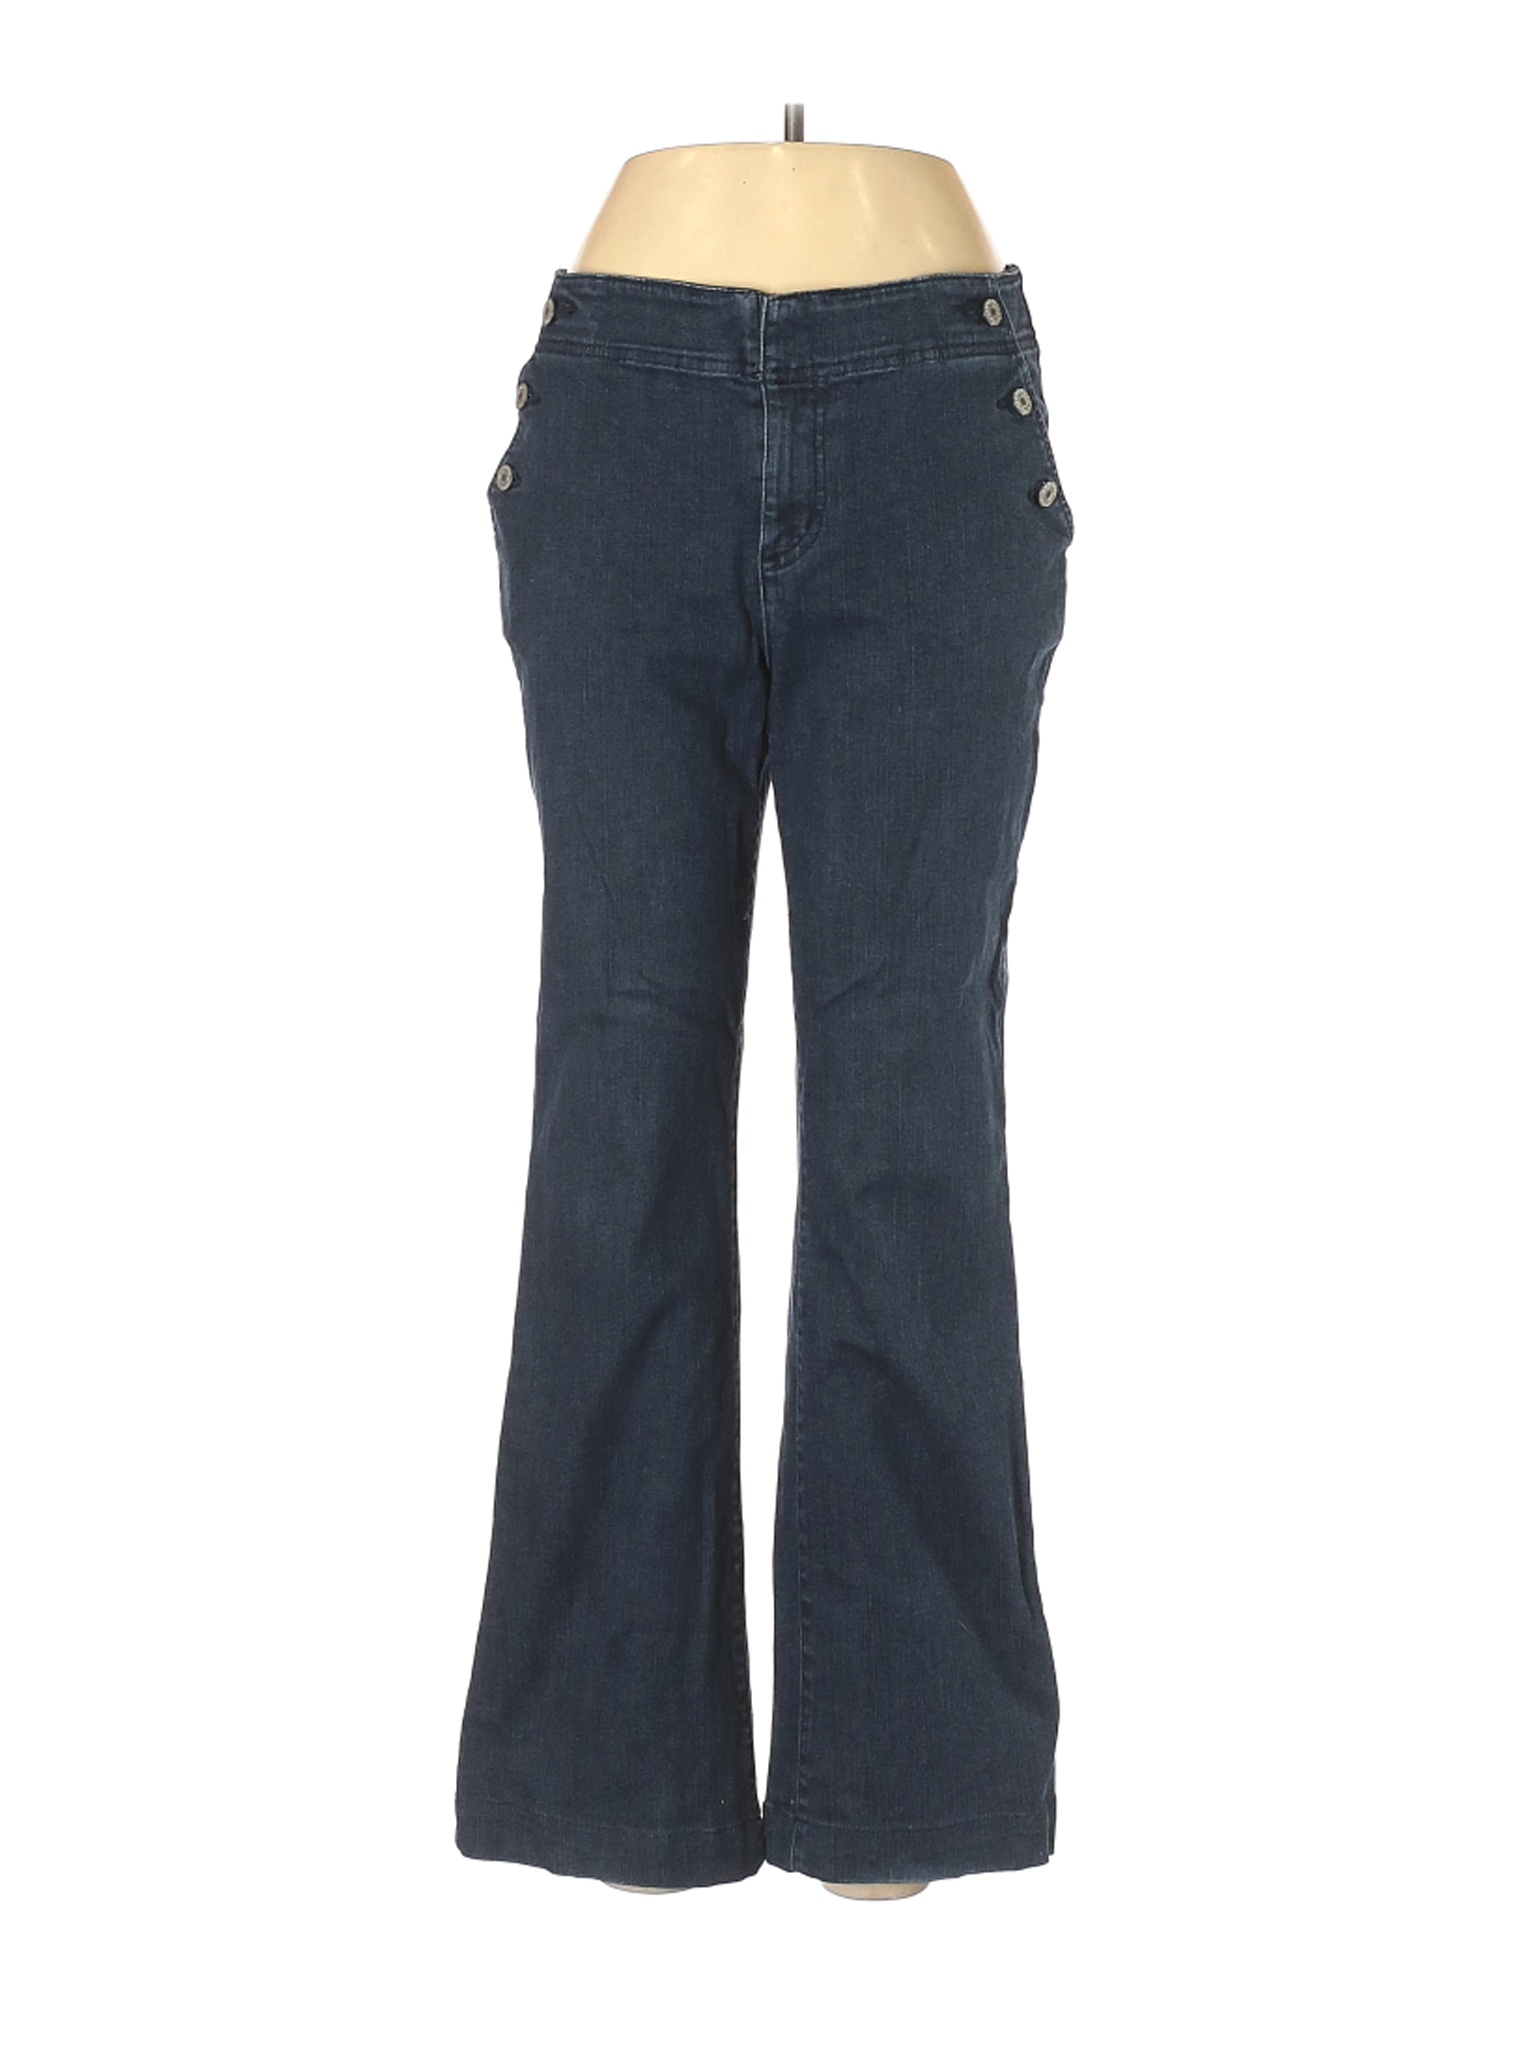 Talbots Outlet Women Blue Jeans 10 Petites | eBay